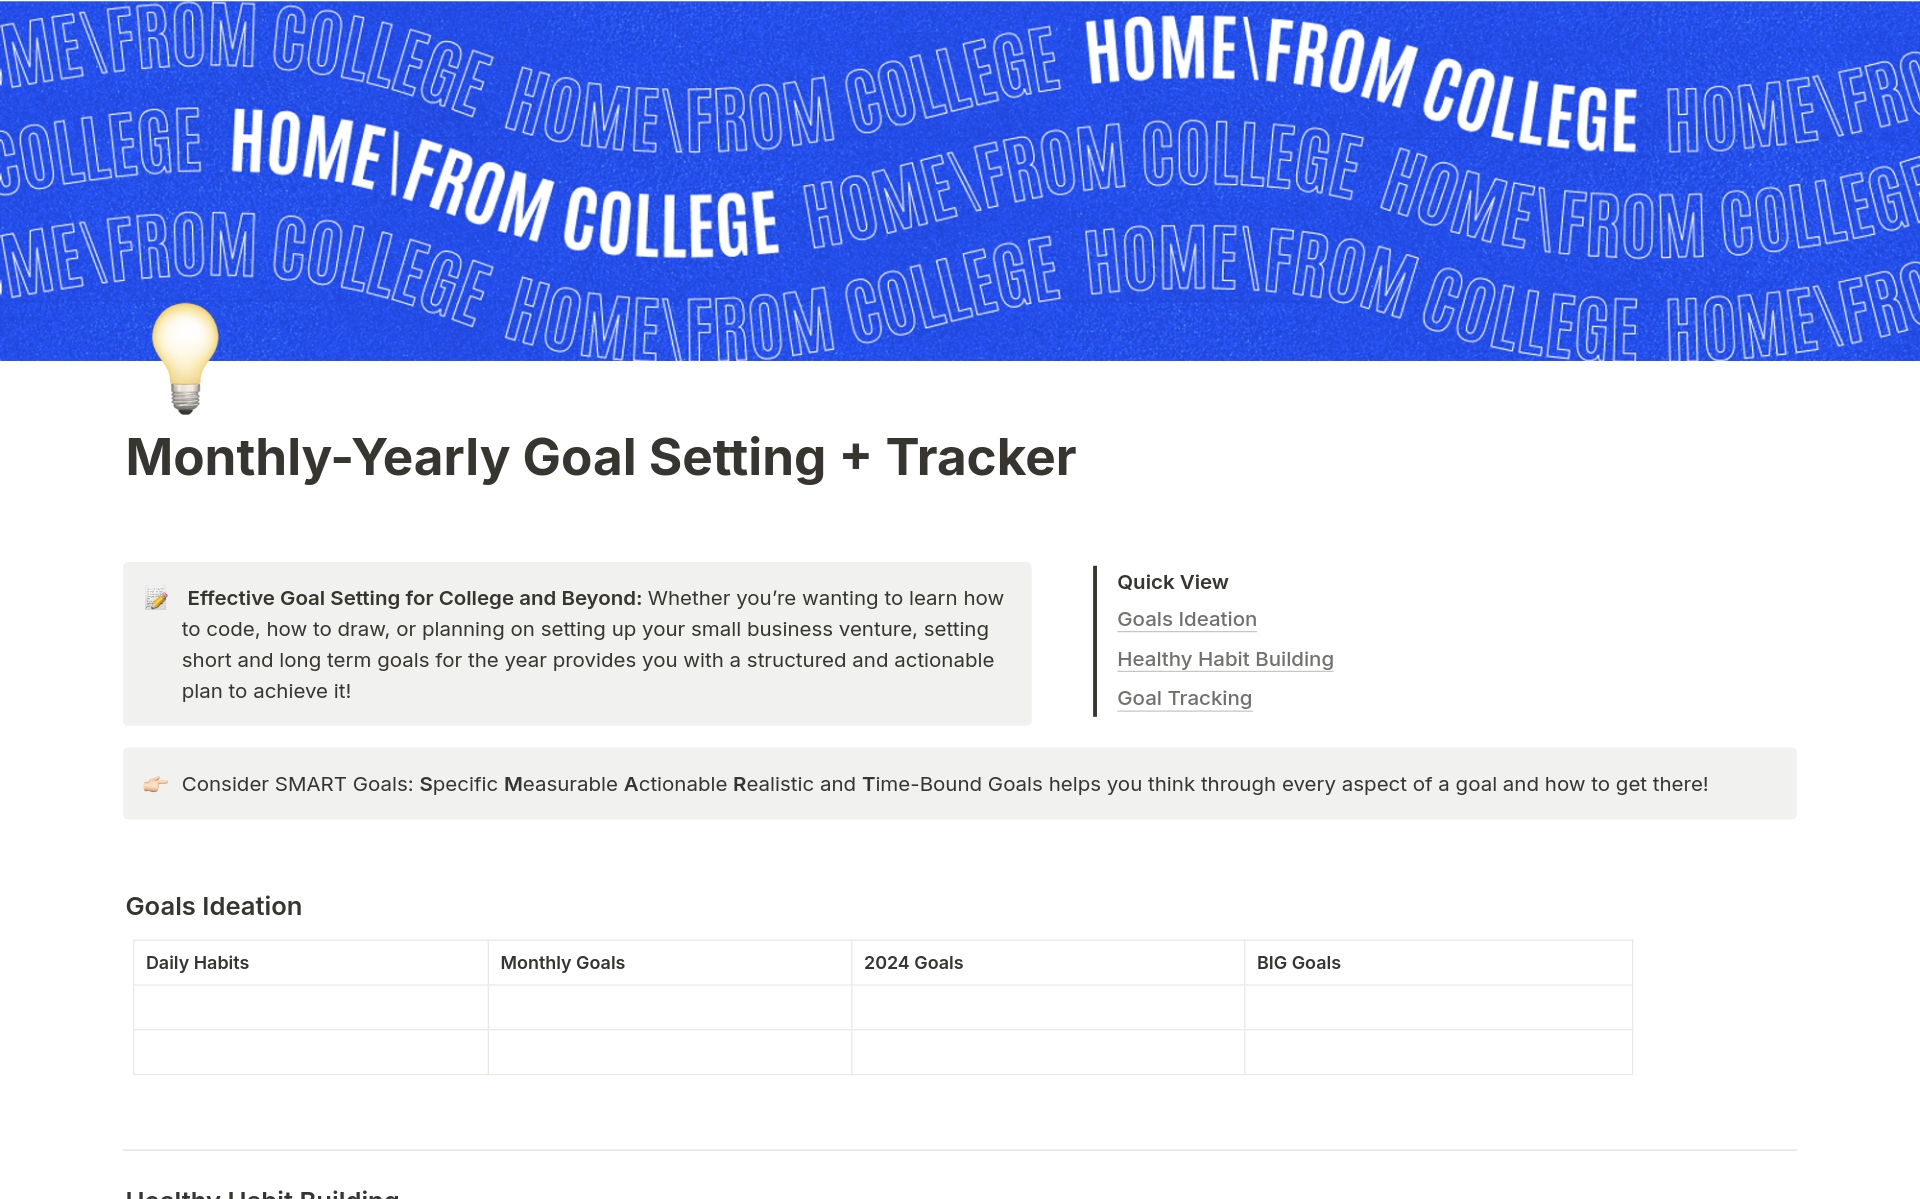 Aperçu du modèle de Goal Setting + Tracker